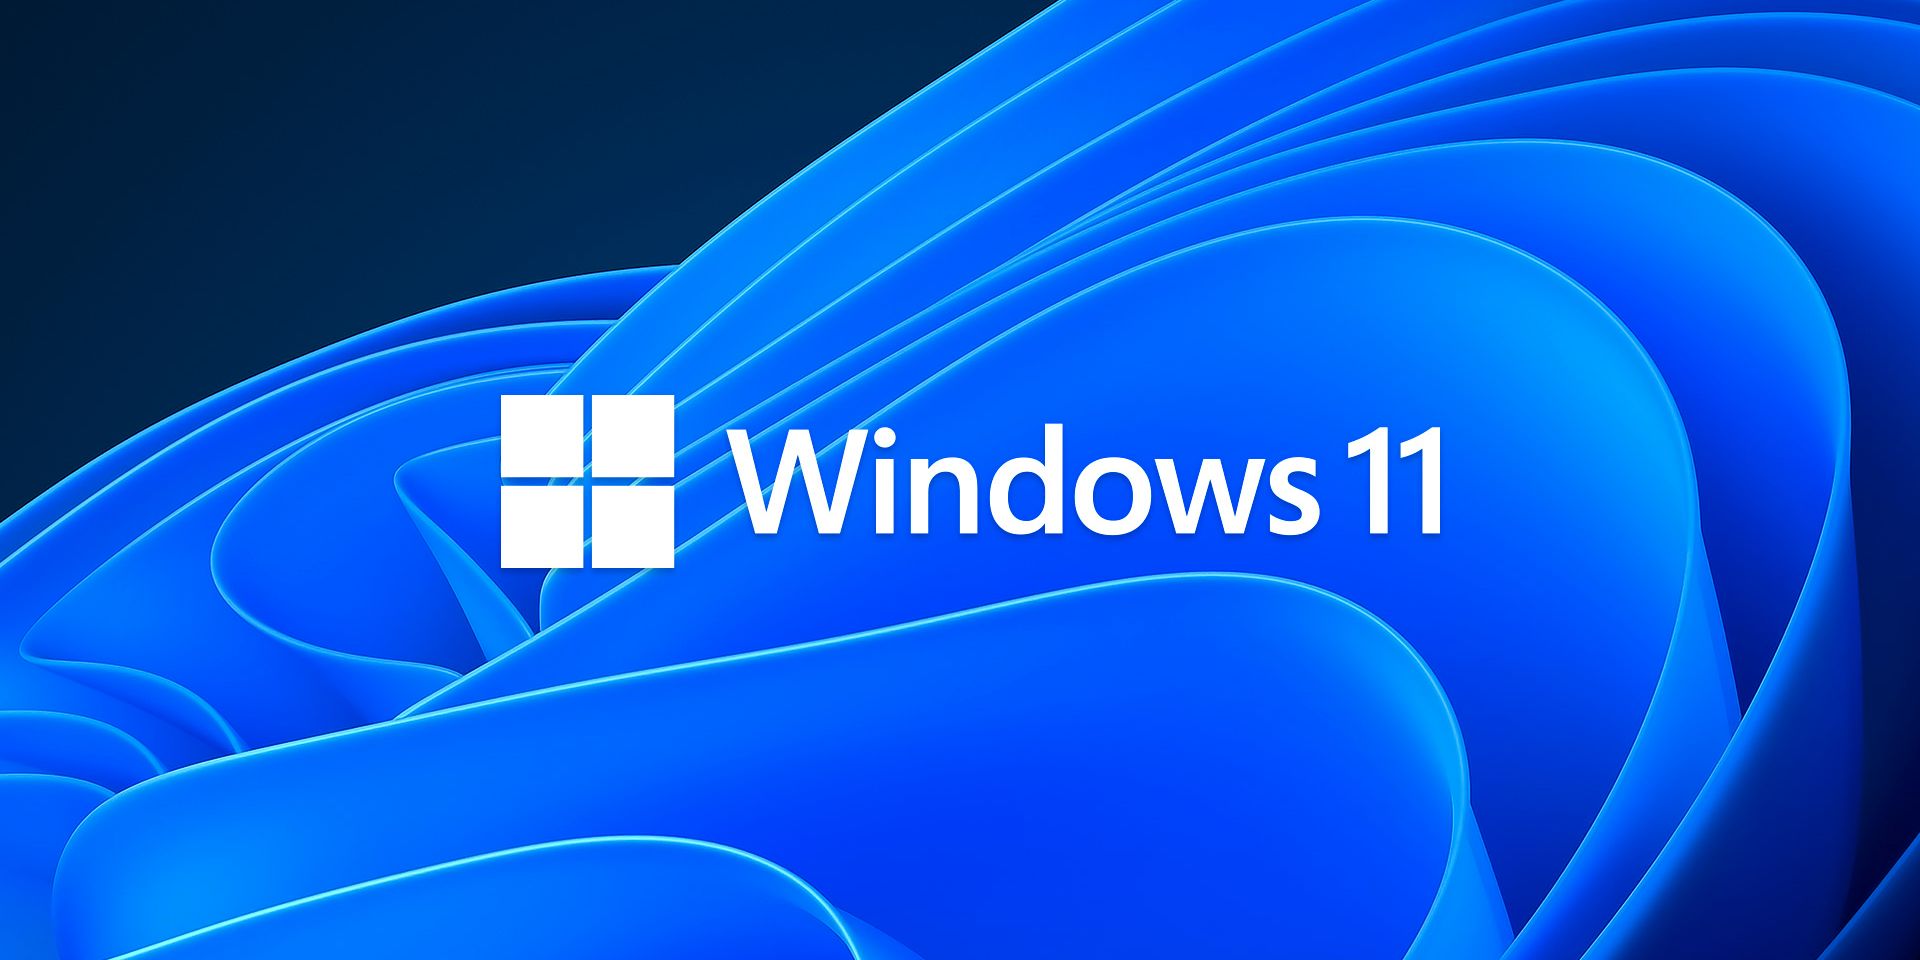 Windows 11 Release Date Just Confirmed